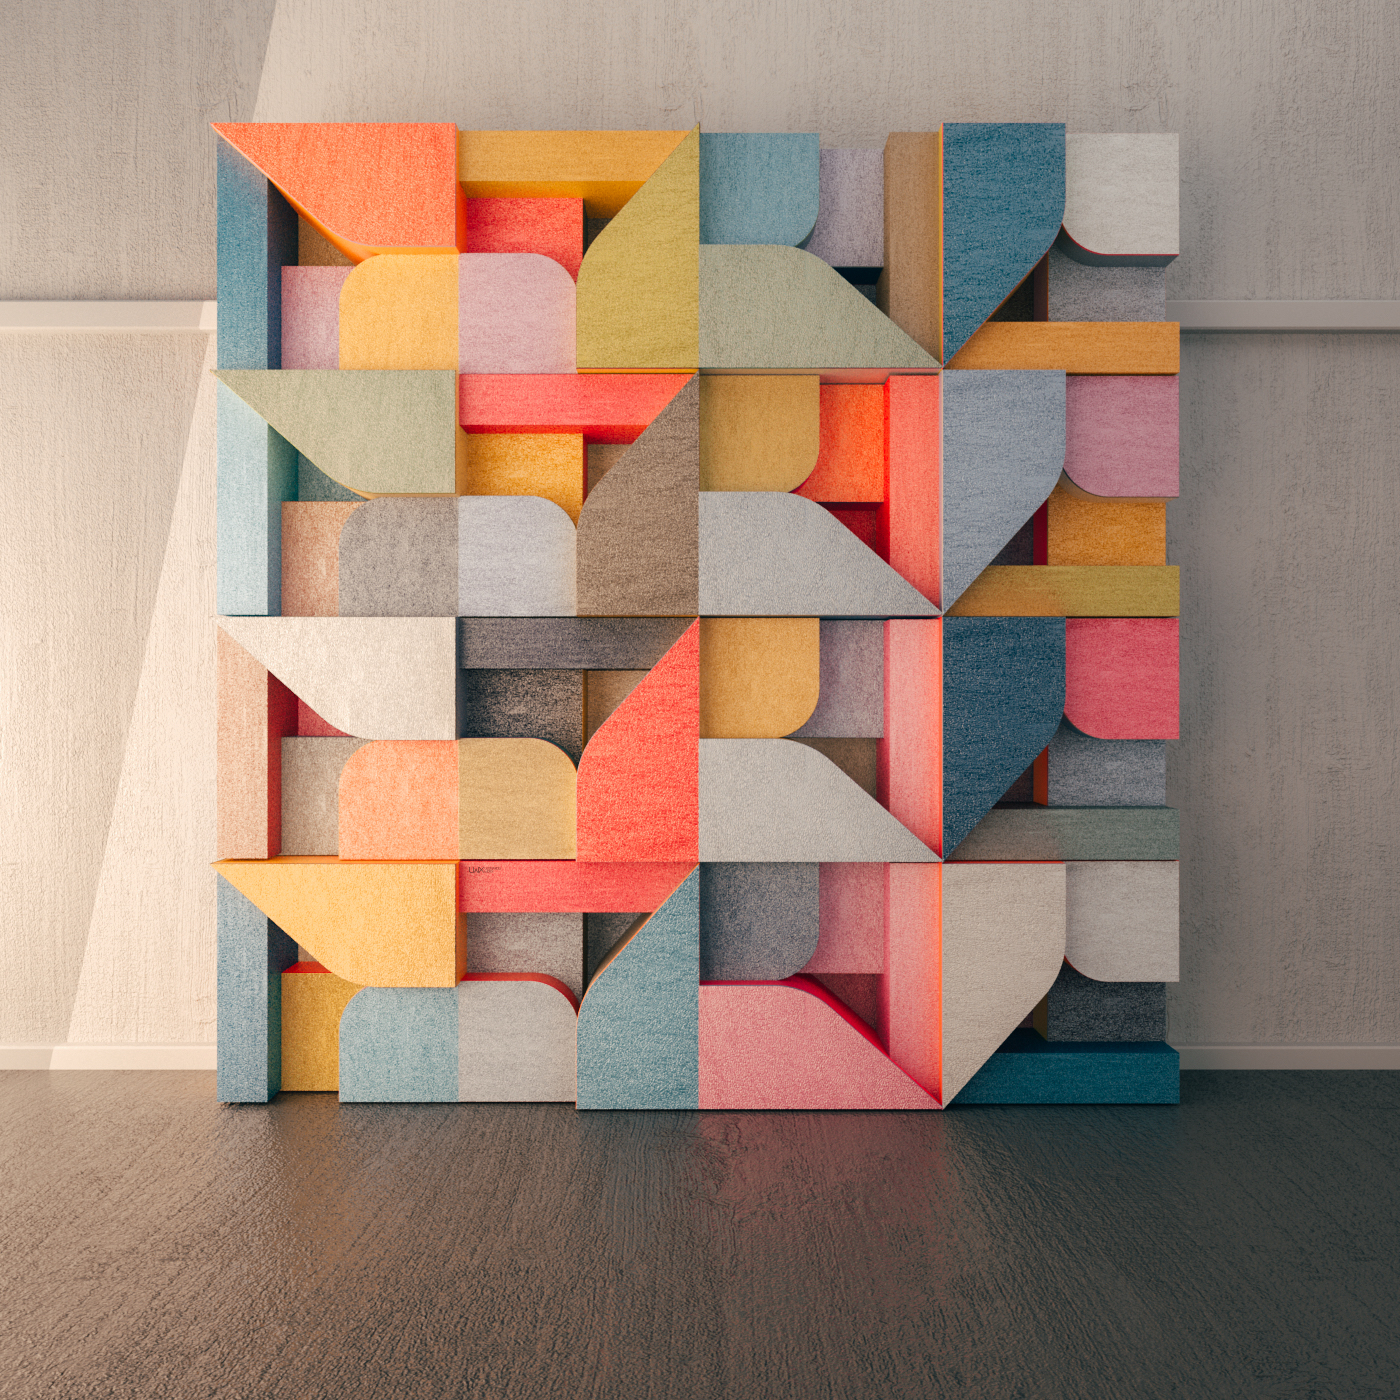 pattern retrogame module wood sculpture pantone tetris joypad installation 3dpattern